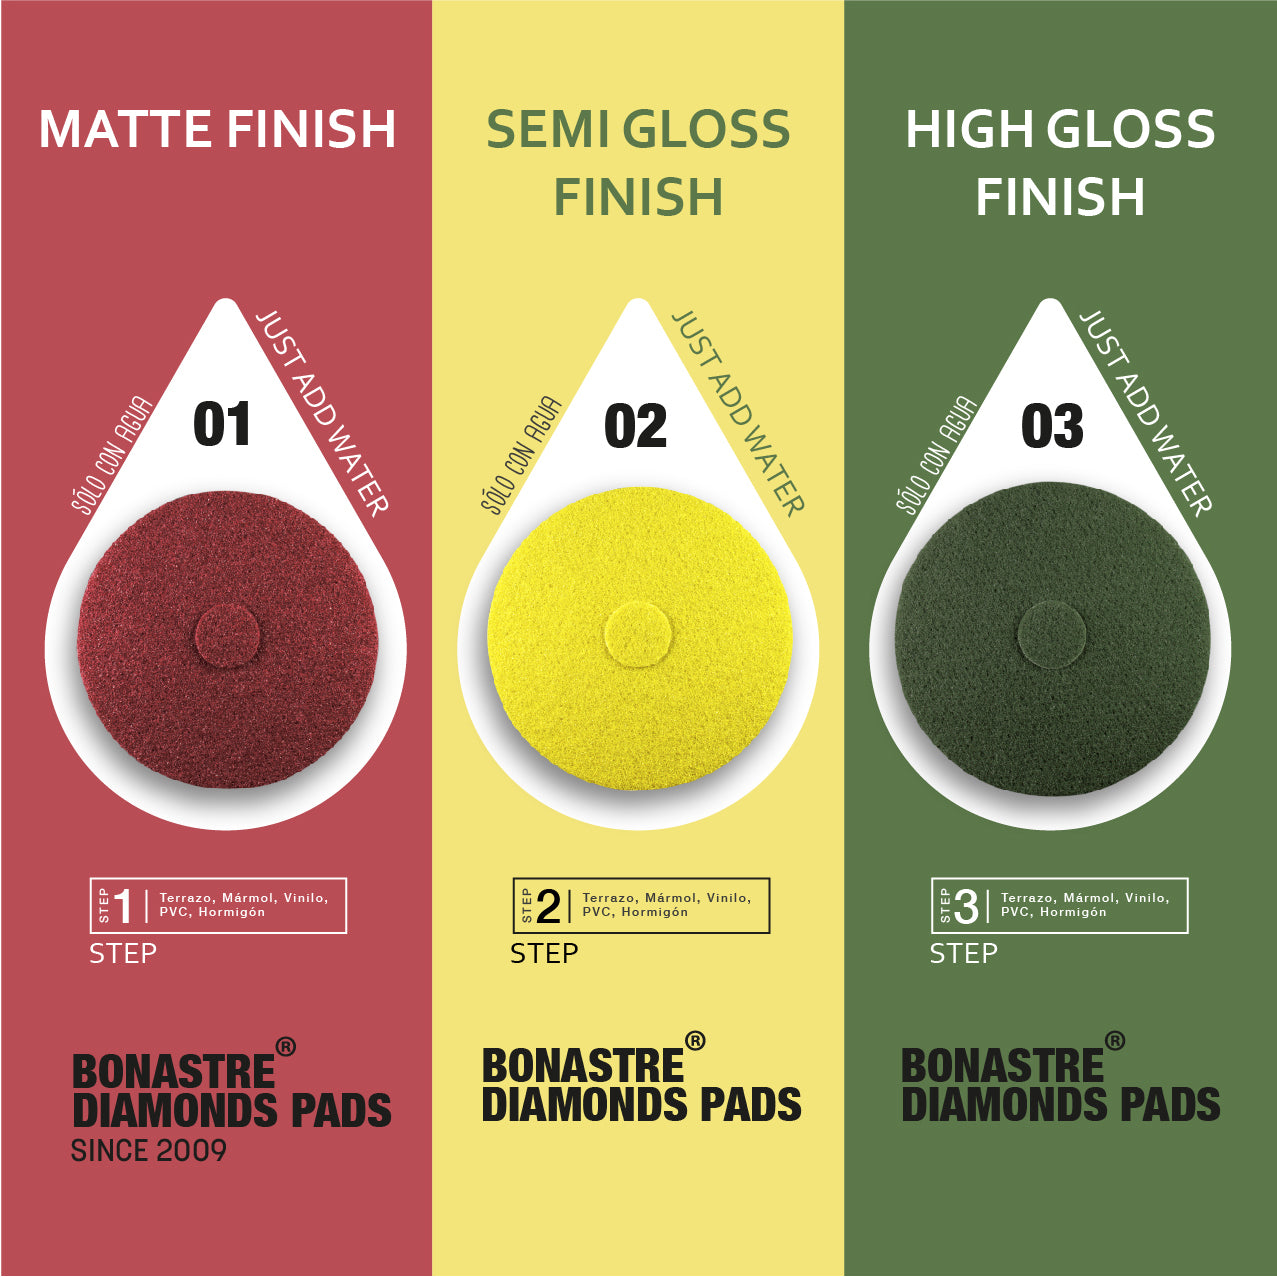 Bonastre DIP Step-3 GREEN / High Gloss